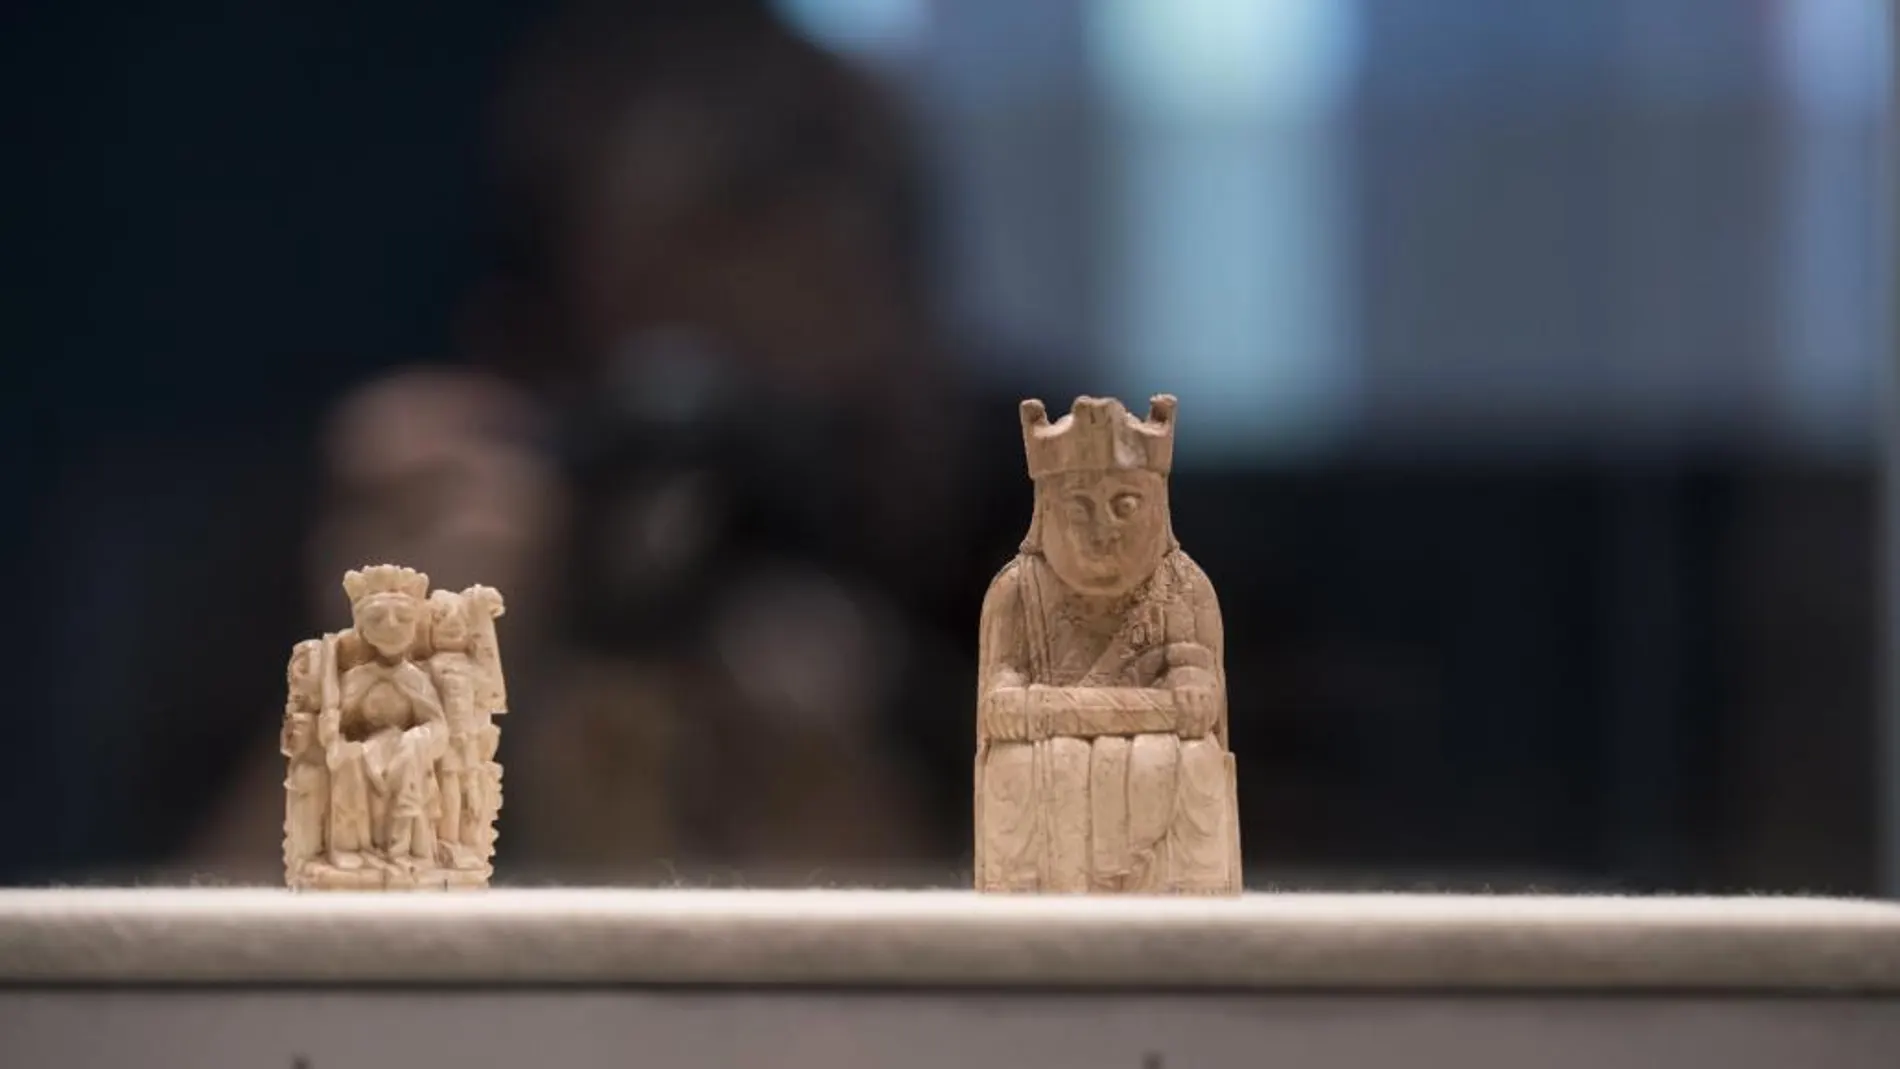 Reina de ajedrez de marfil de morsa que data entre los años 1.300-1.500 d.c